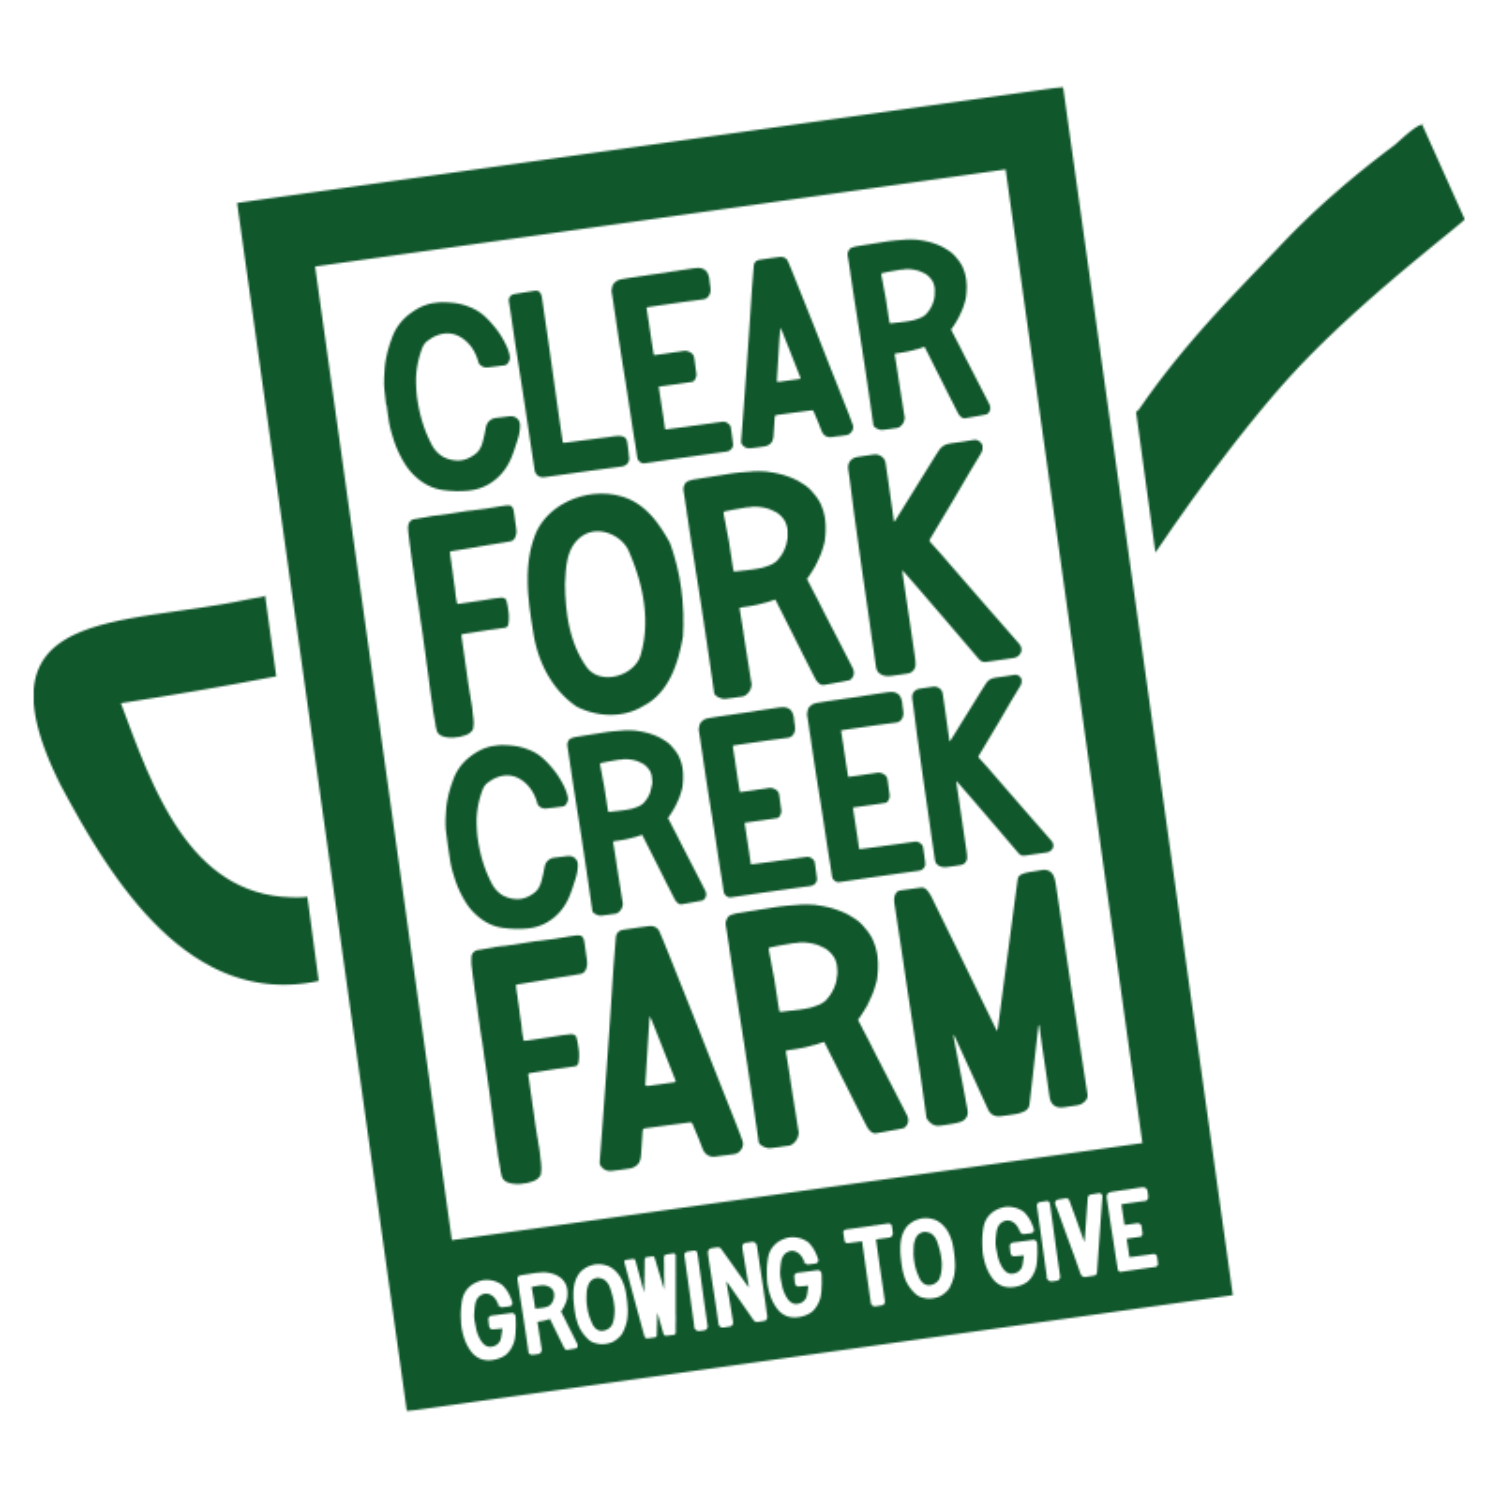 Clearfork Creek Farm